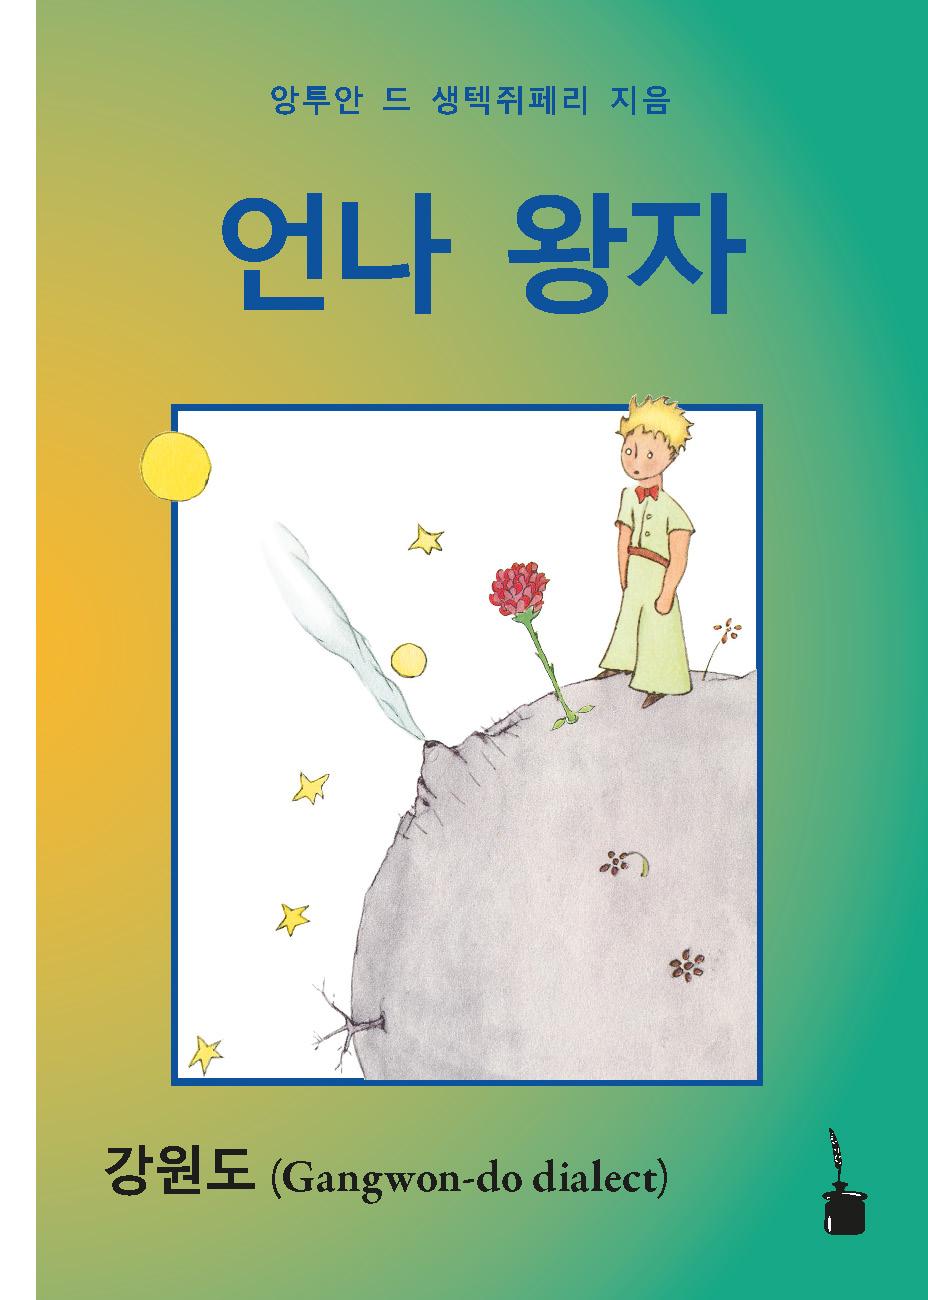 Kniha Eonna Wangja Eunhye Jo